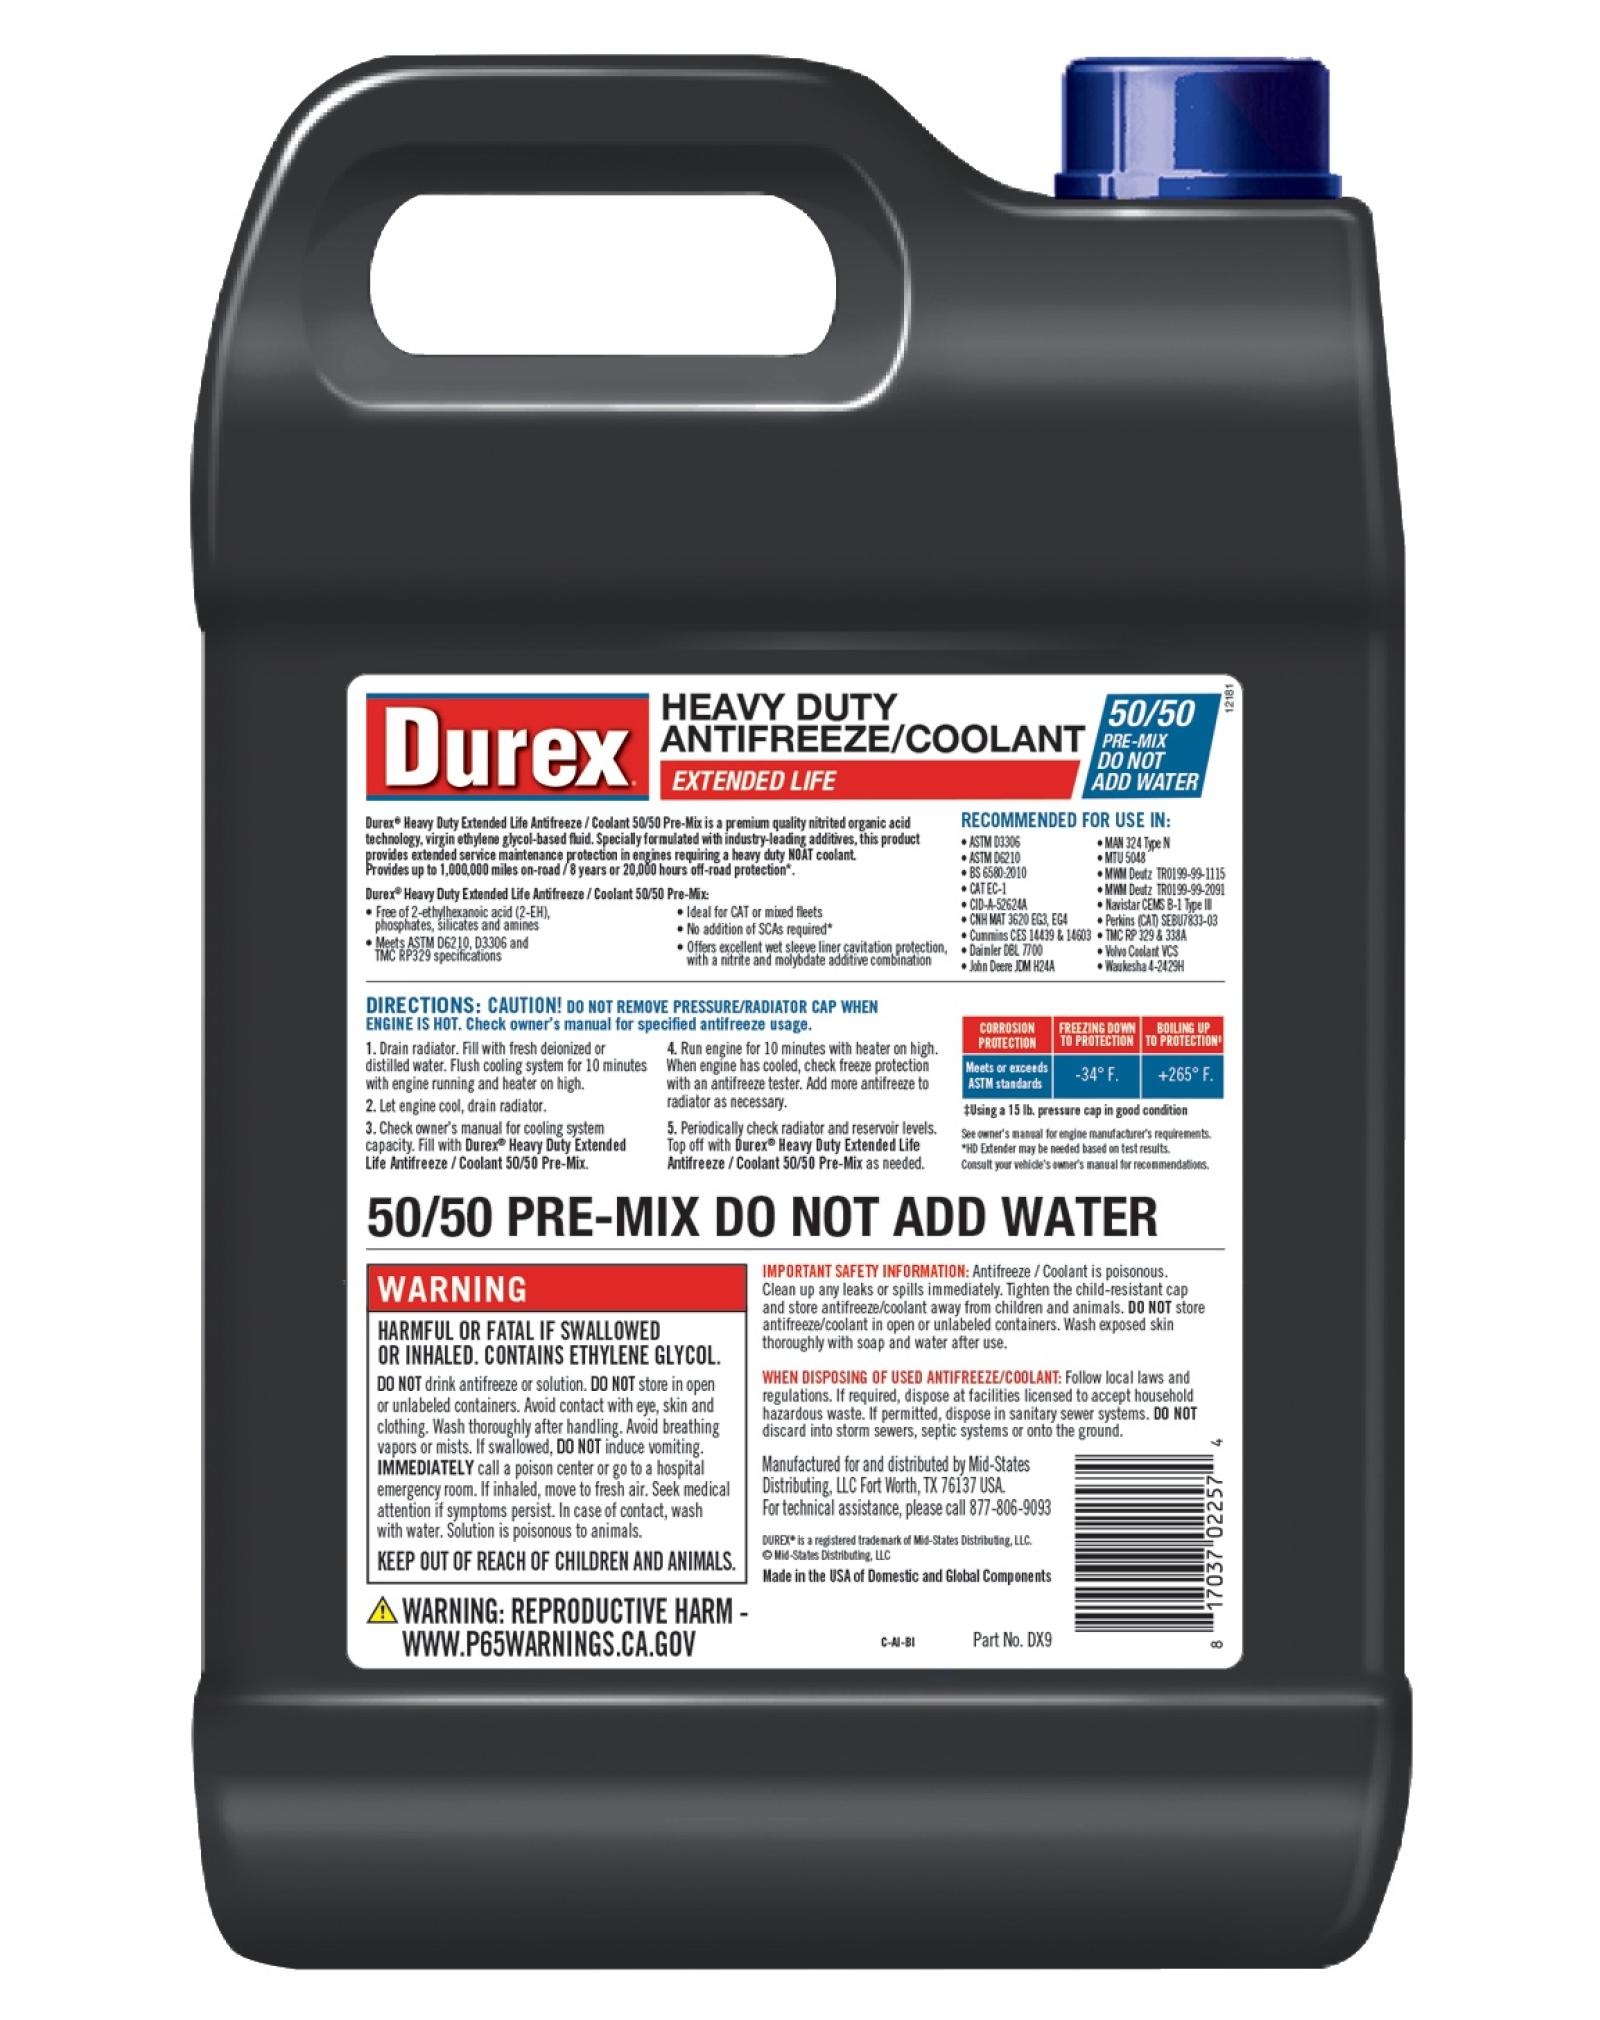 durex-heavy-duty-extended-life-formula-50-50-antifreeze-coolant